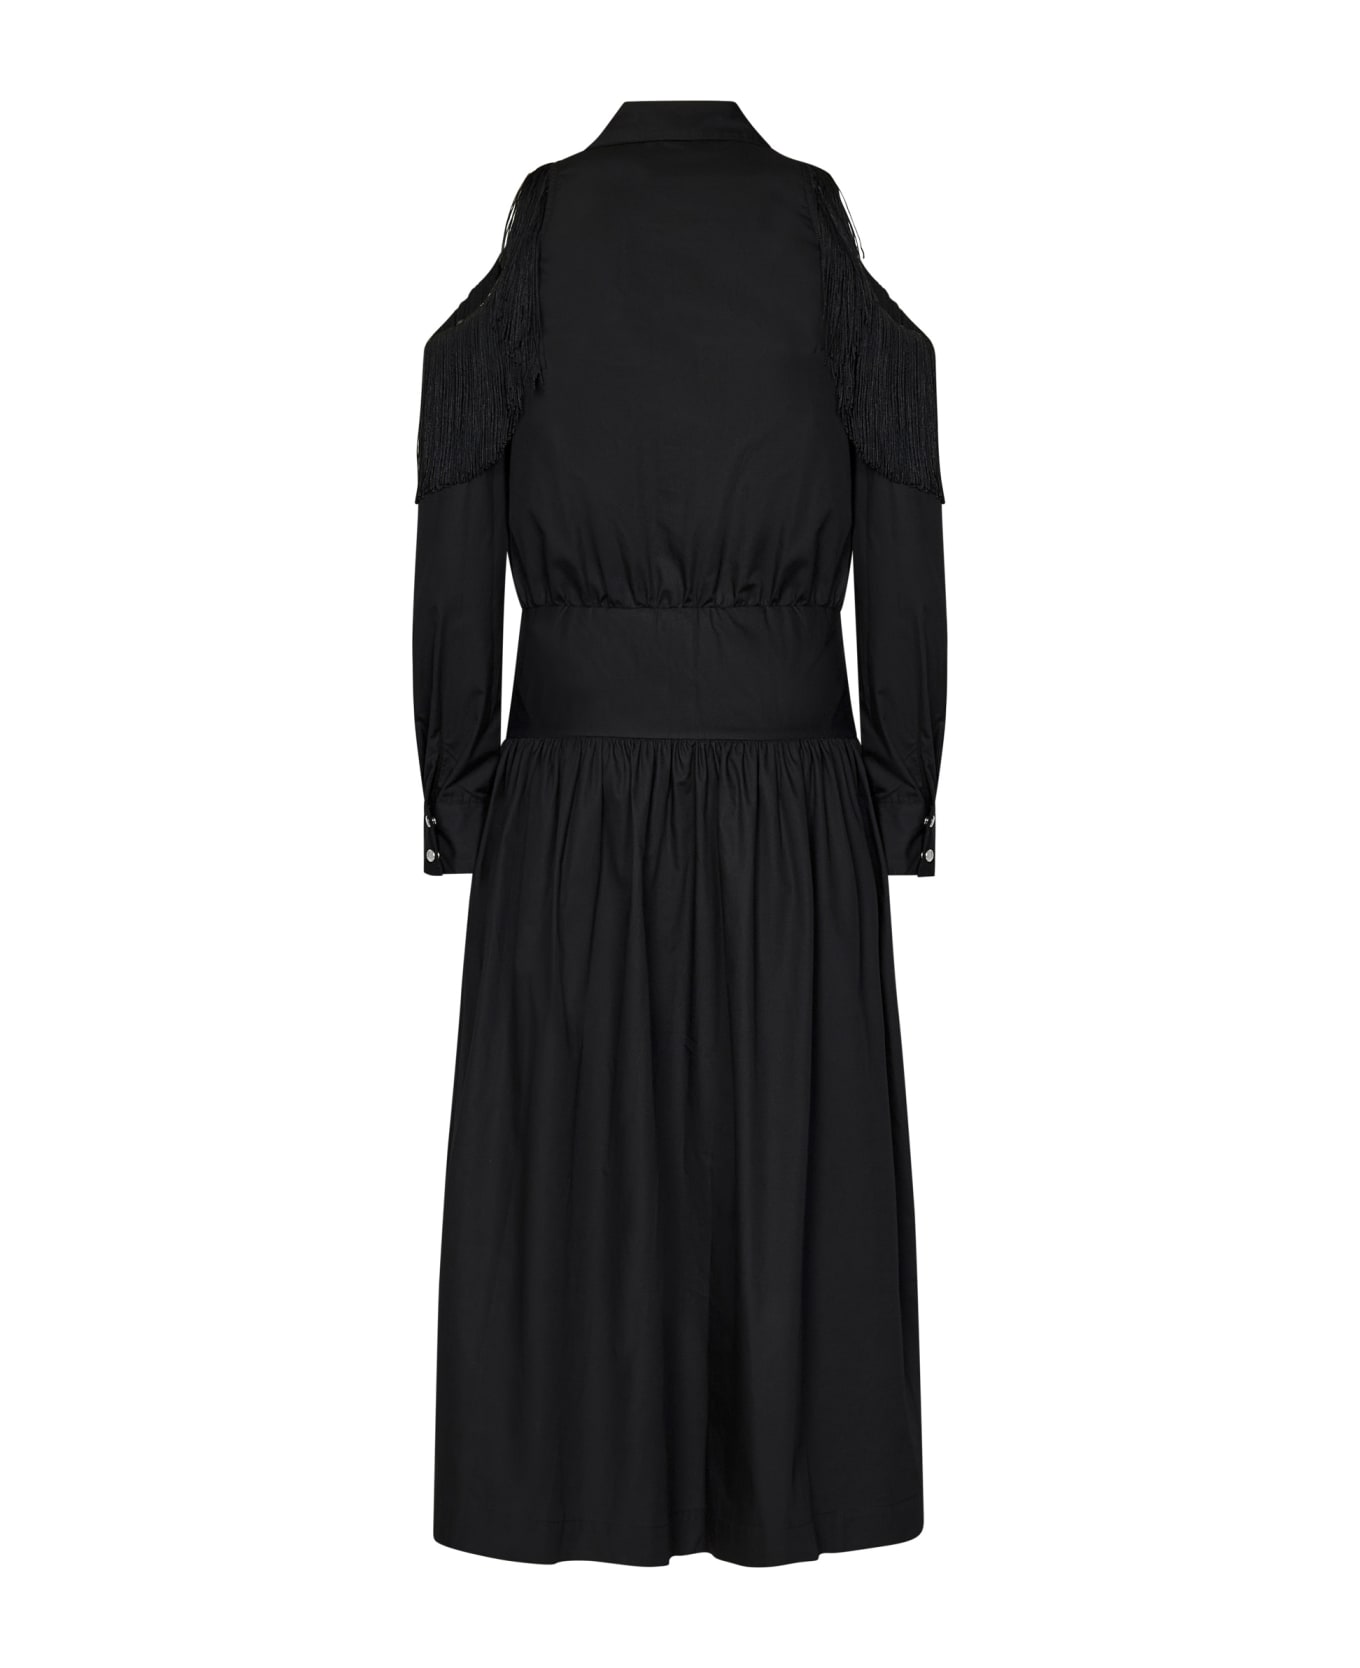 Pinko Hazzard Dress - Black